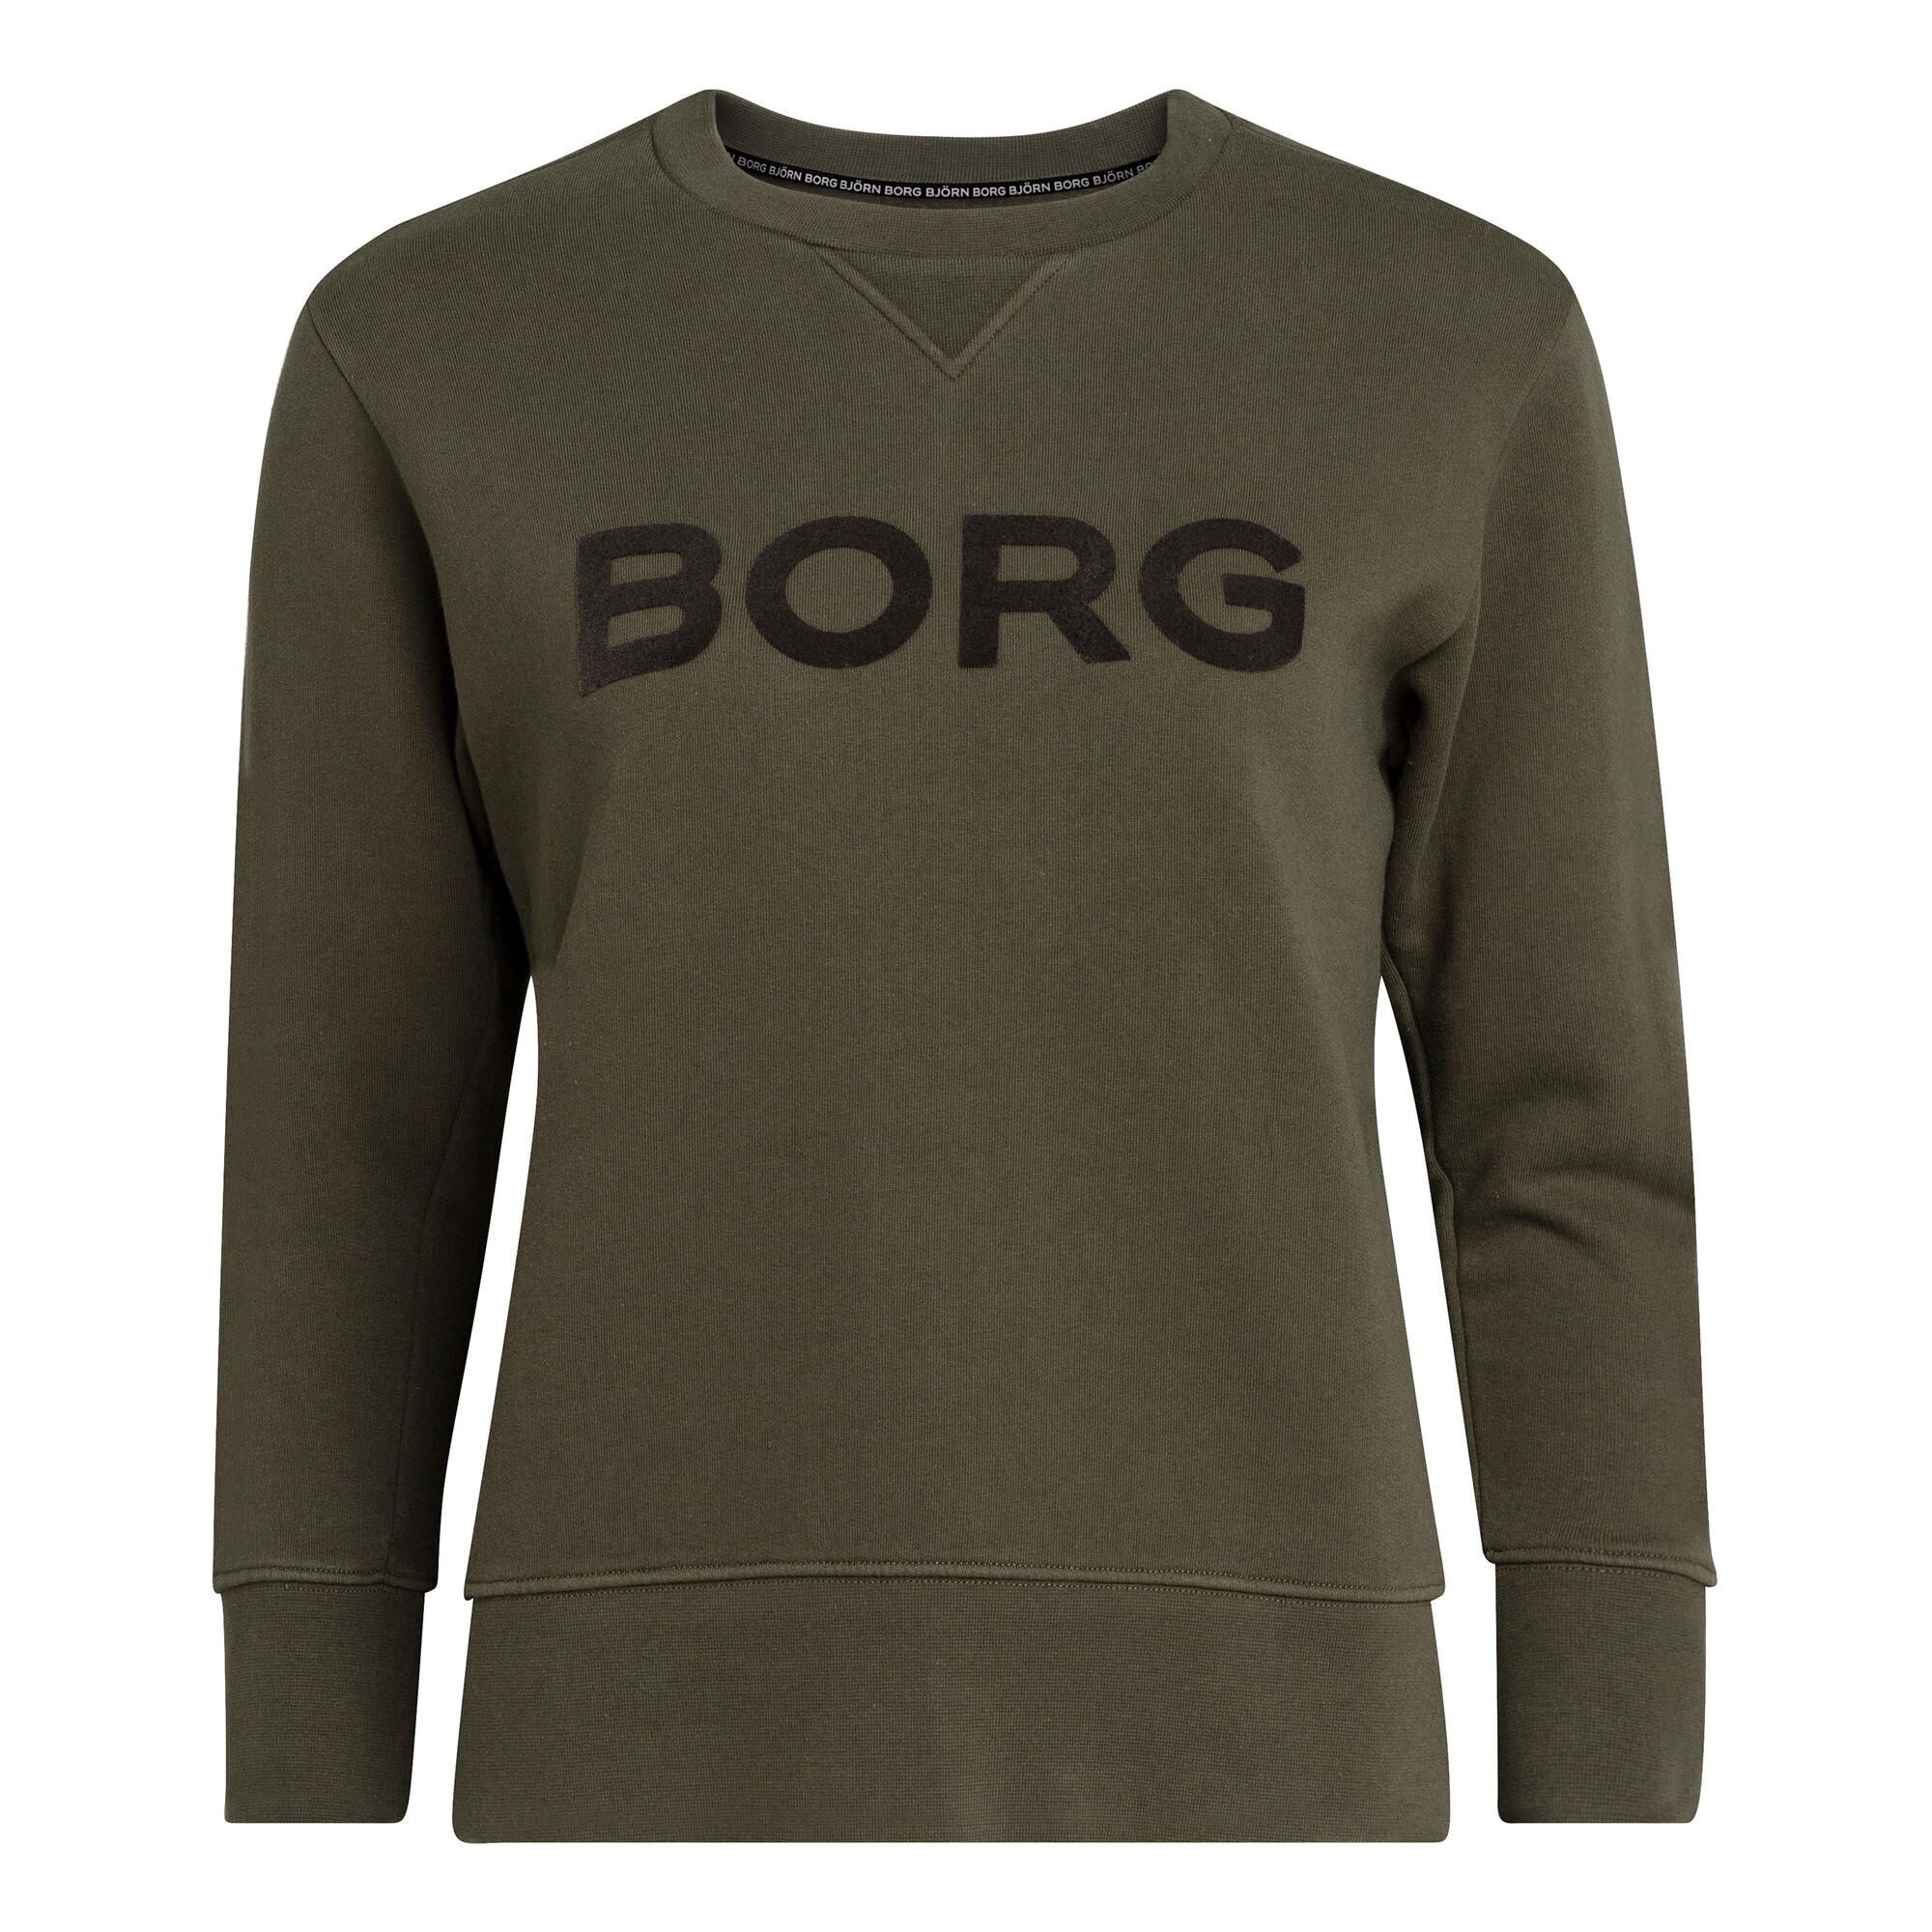 Ja udtryk Almægtig buy Björn Borg Crew Sport Sweatshirt Women - Olive, Black online |  Tennis-Point